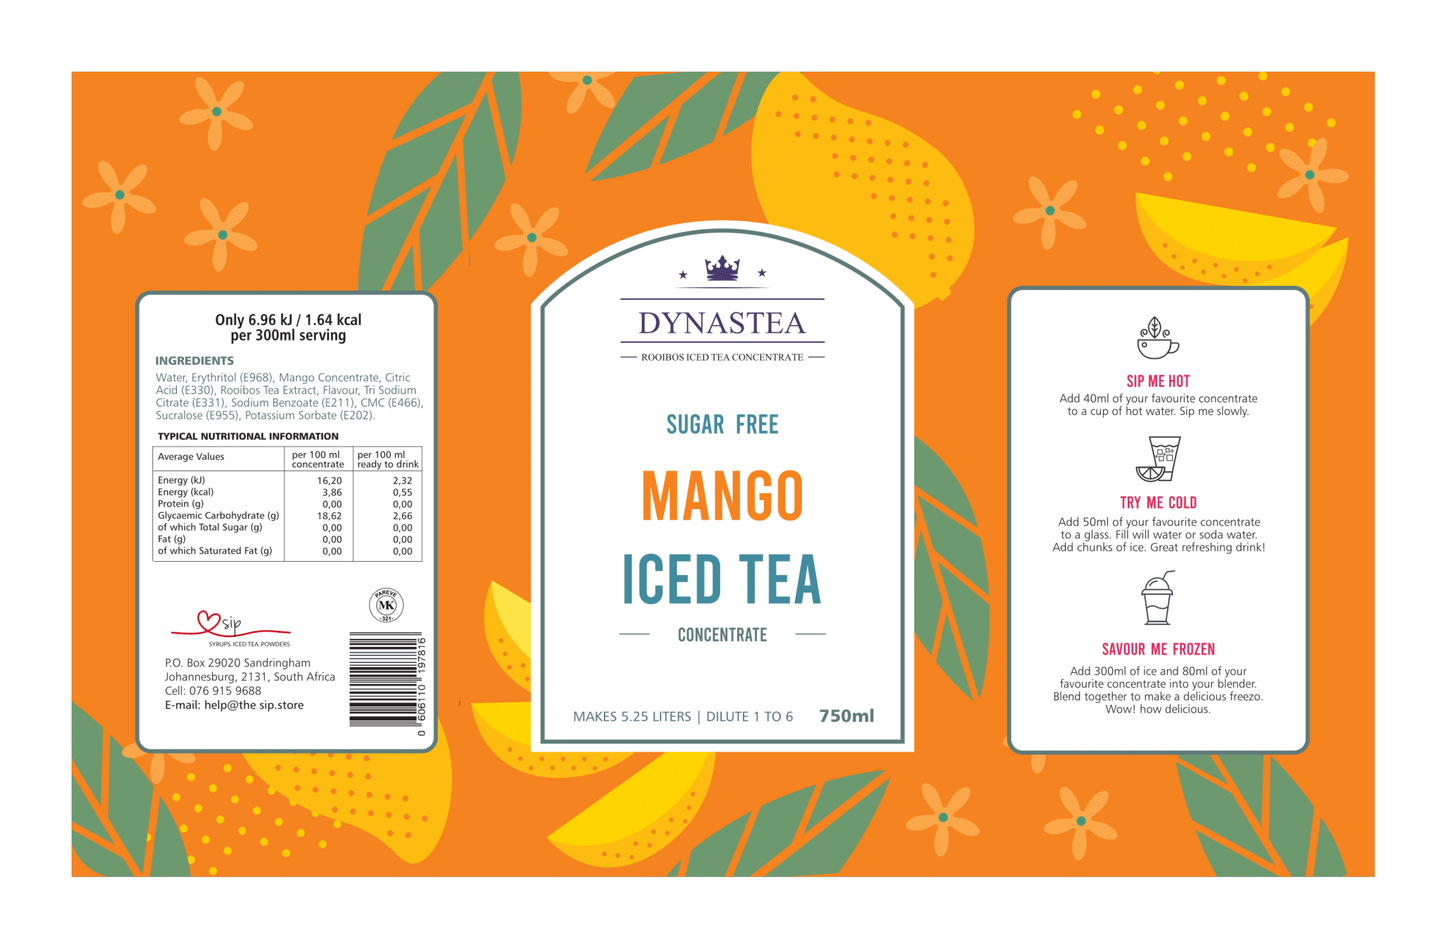 Mango Iced Tea Concentrate